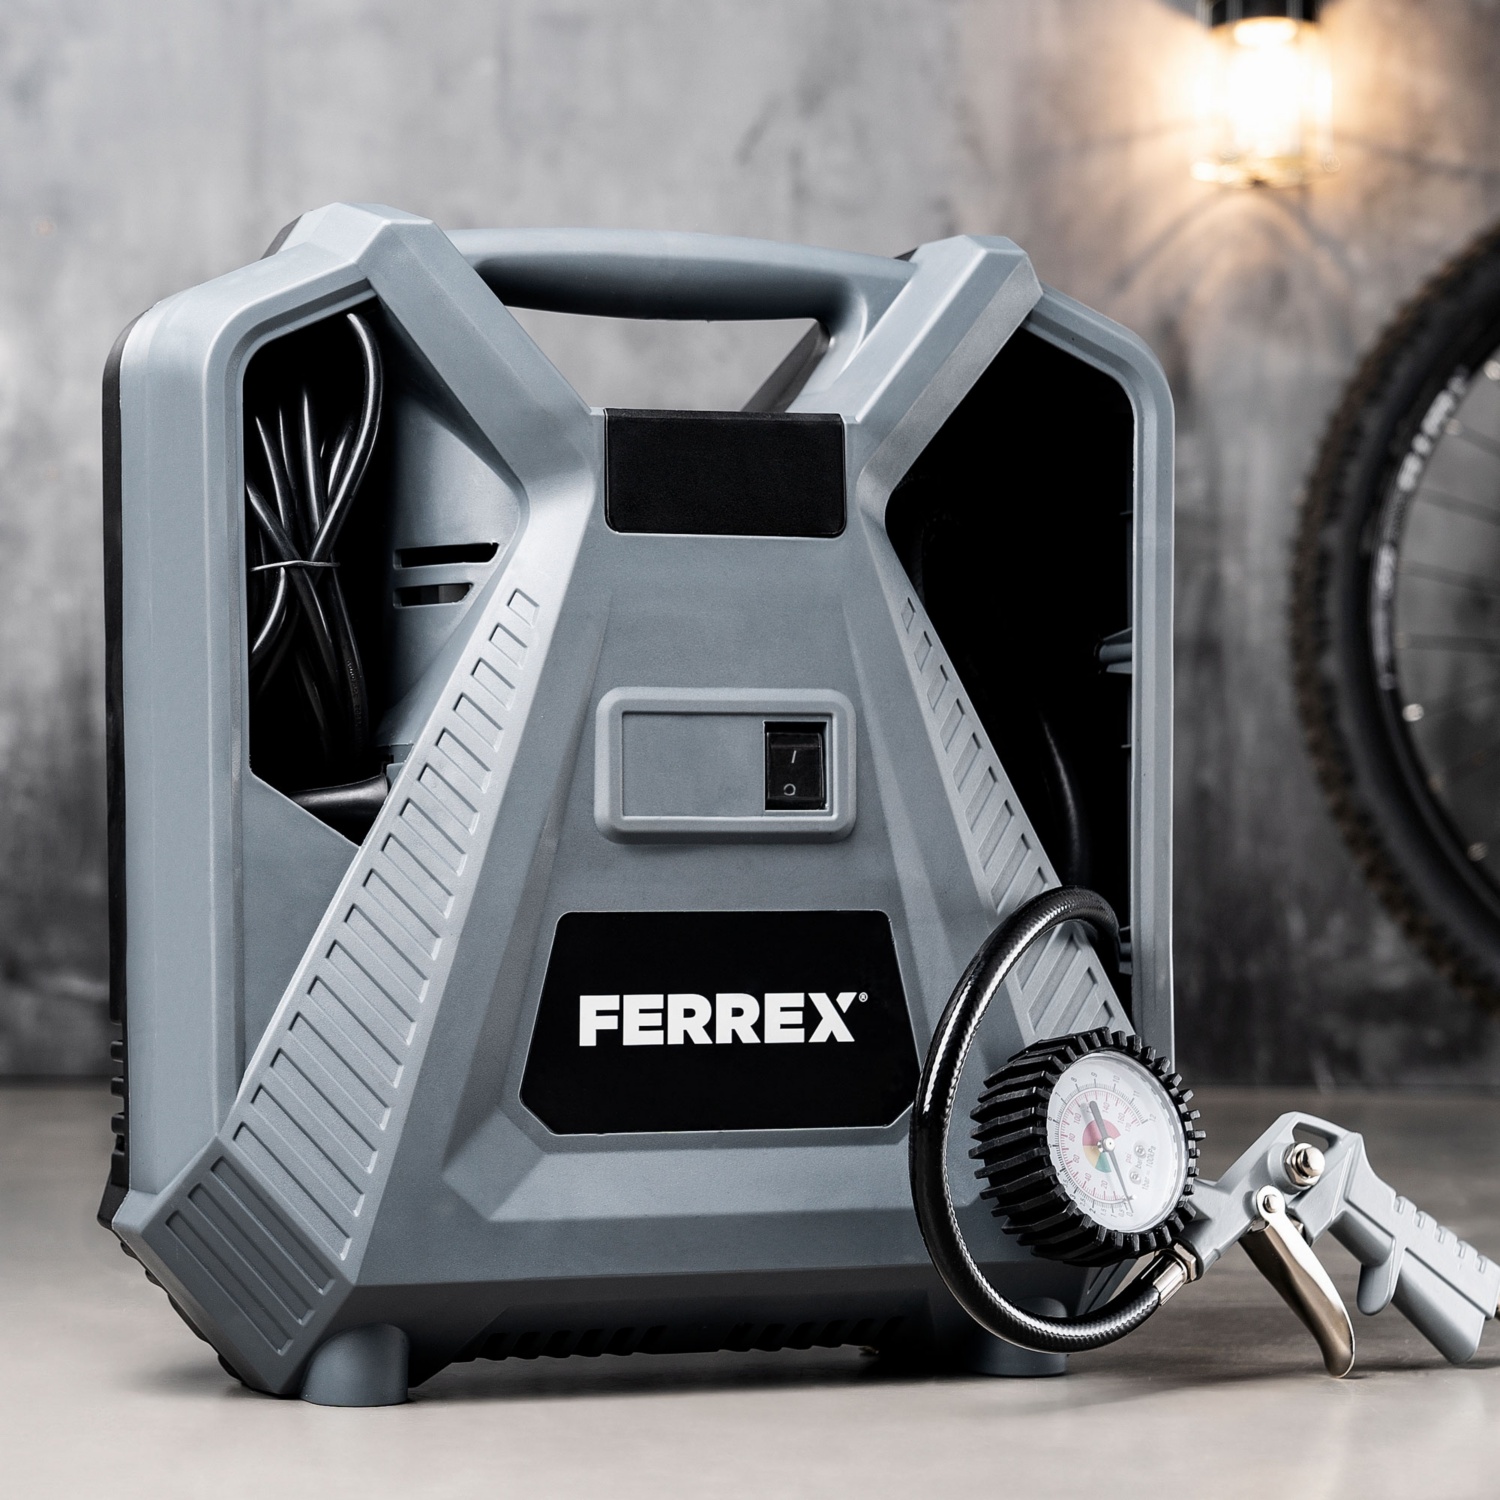 FERREX Mobiler Kompressor